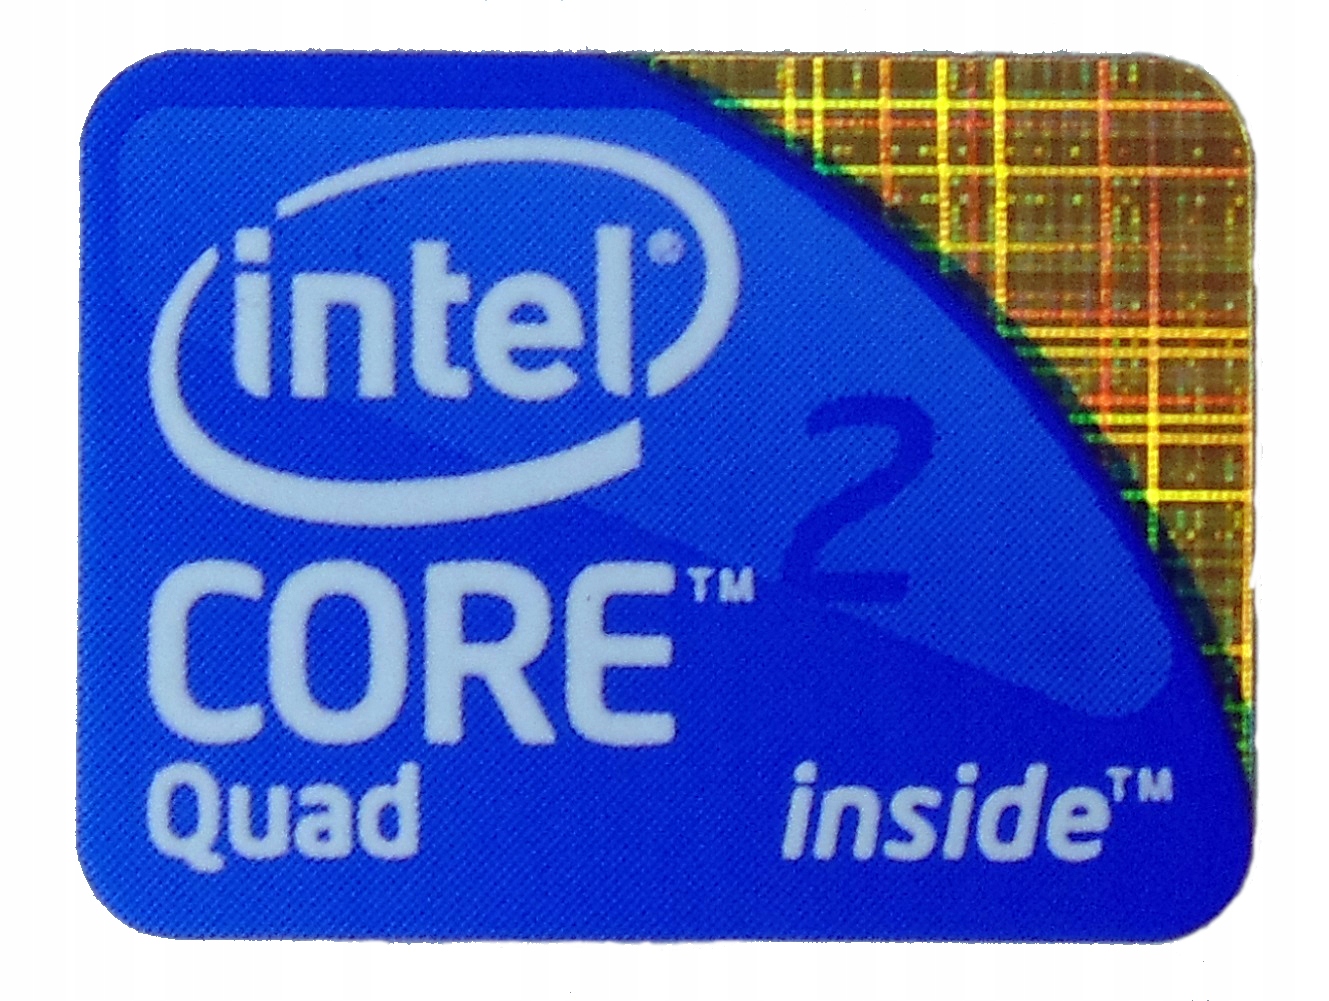 Процессор интел коре дуо. Intel inside наклейка Core 2 Duo. Intel Core 2 Duo logo. Интел кор 2 дуо наклейка. Intel Core 2 Quad Sticker.